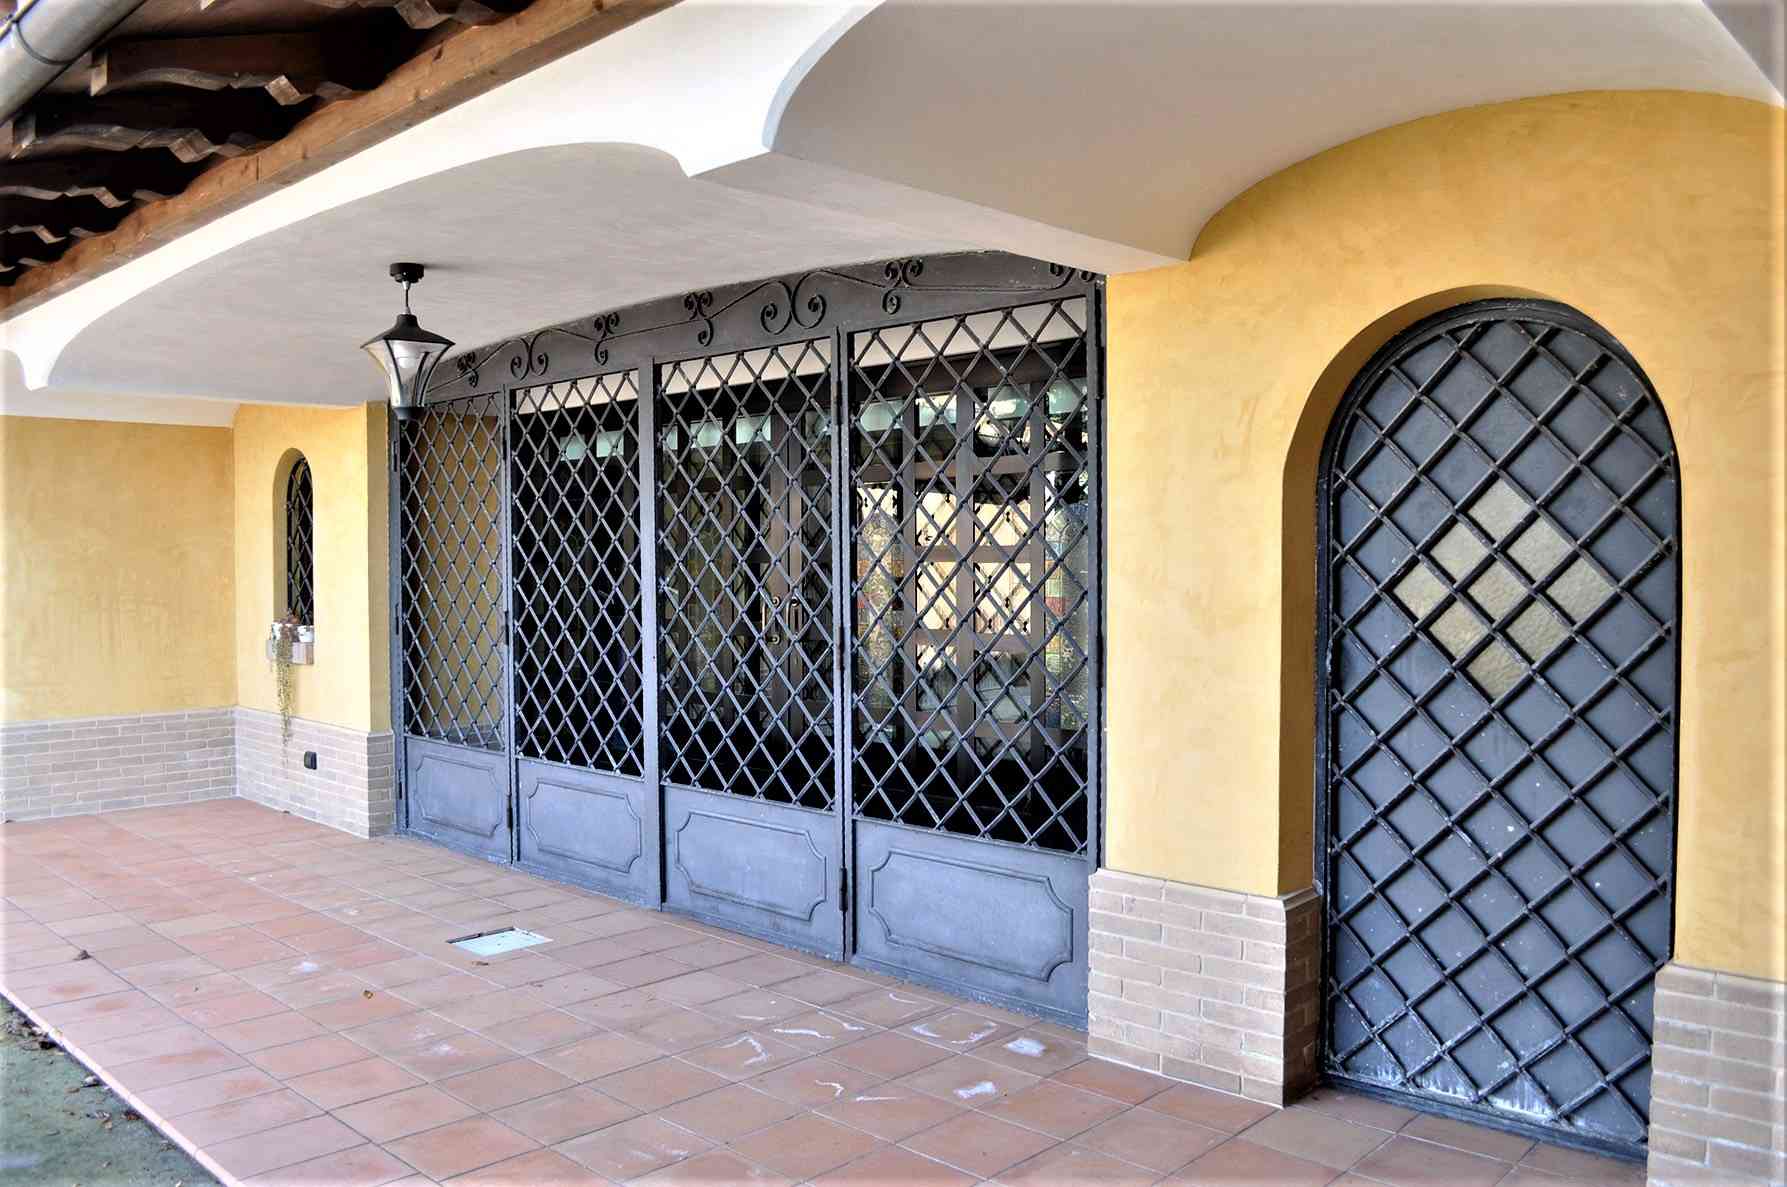 Villa Villa in vendita Tortoreto (TE), Villa Bianca - Tortoreto - EUR 567.877 400